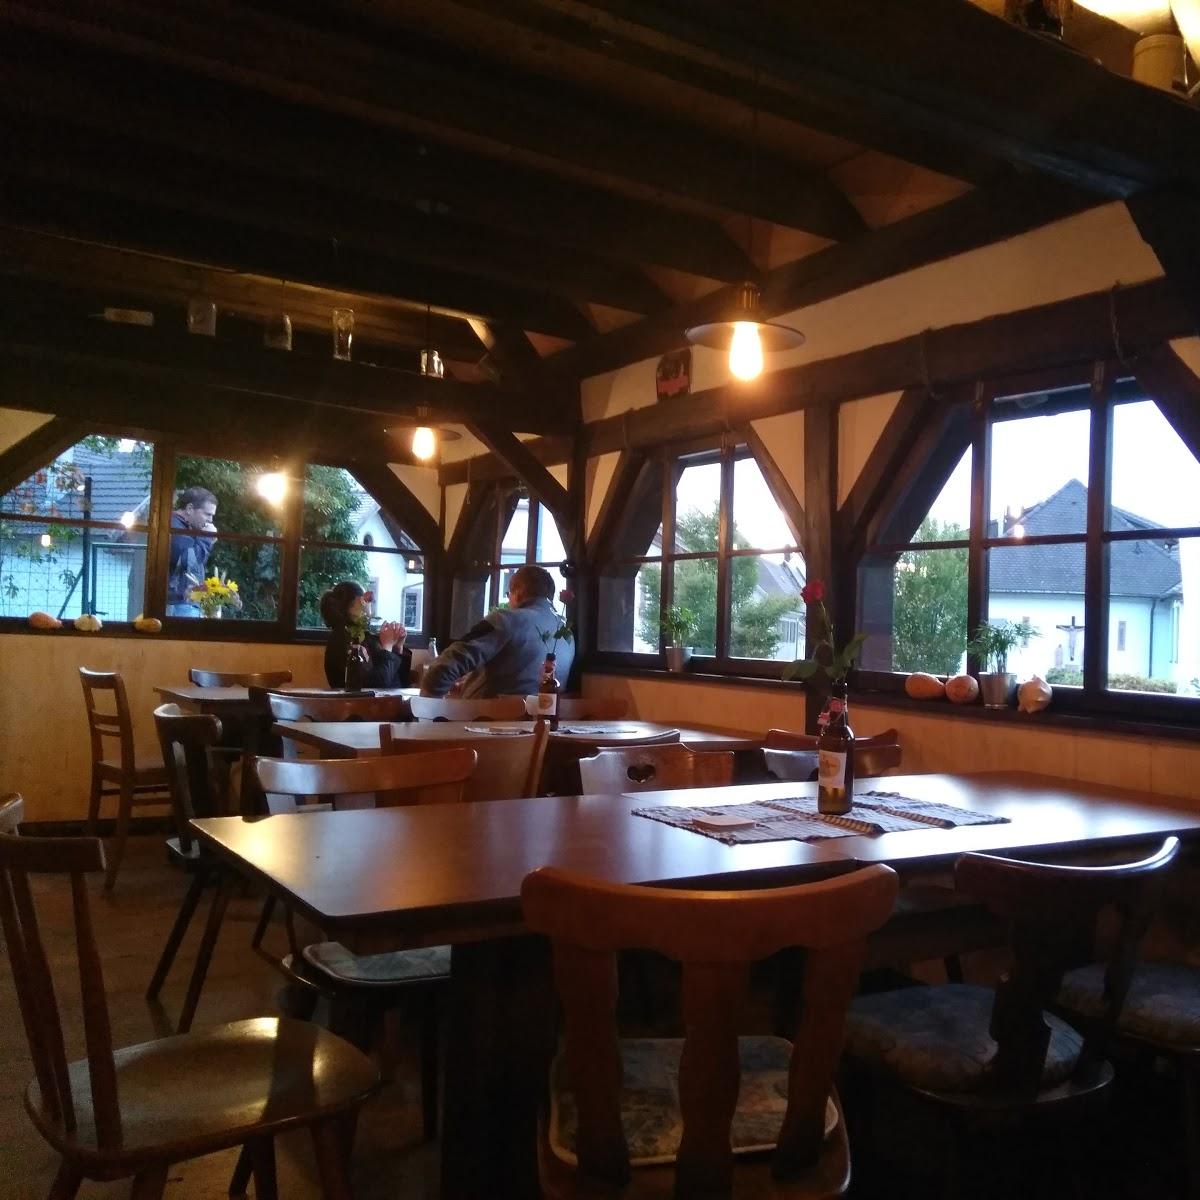 Restaurant "Meierhof Stüble" in  Teningen